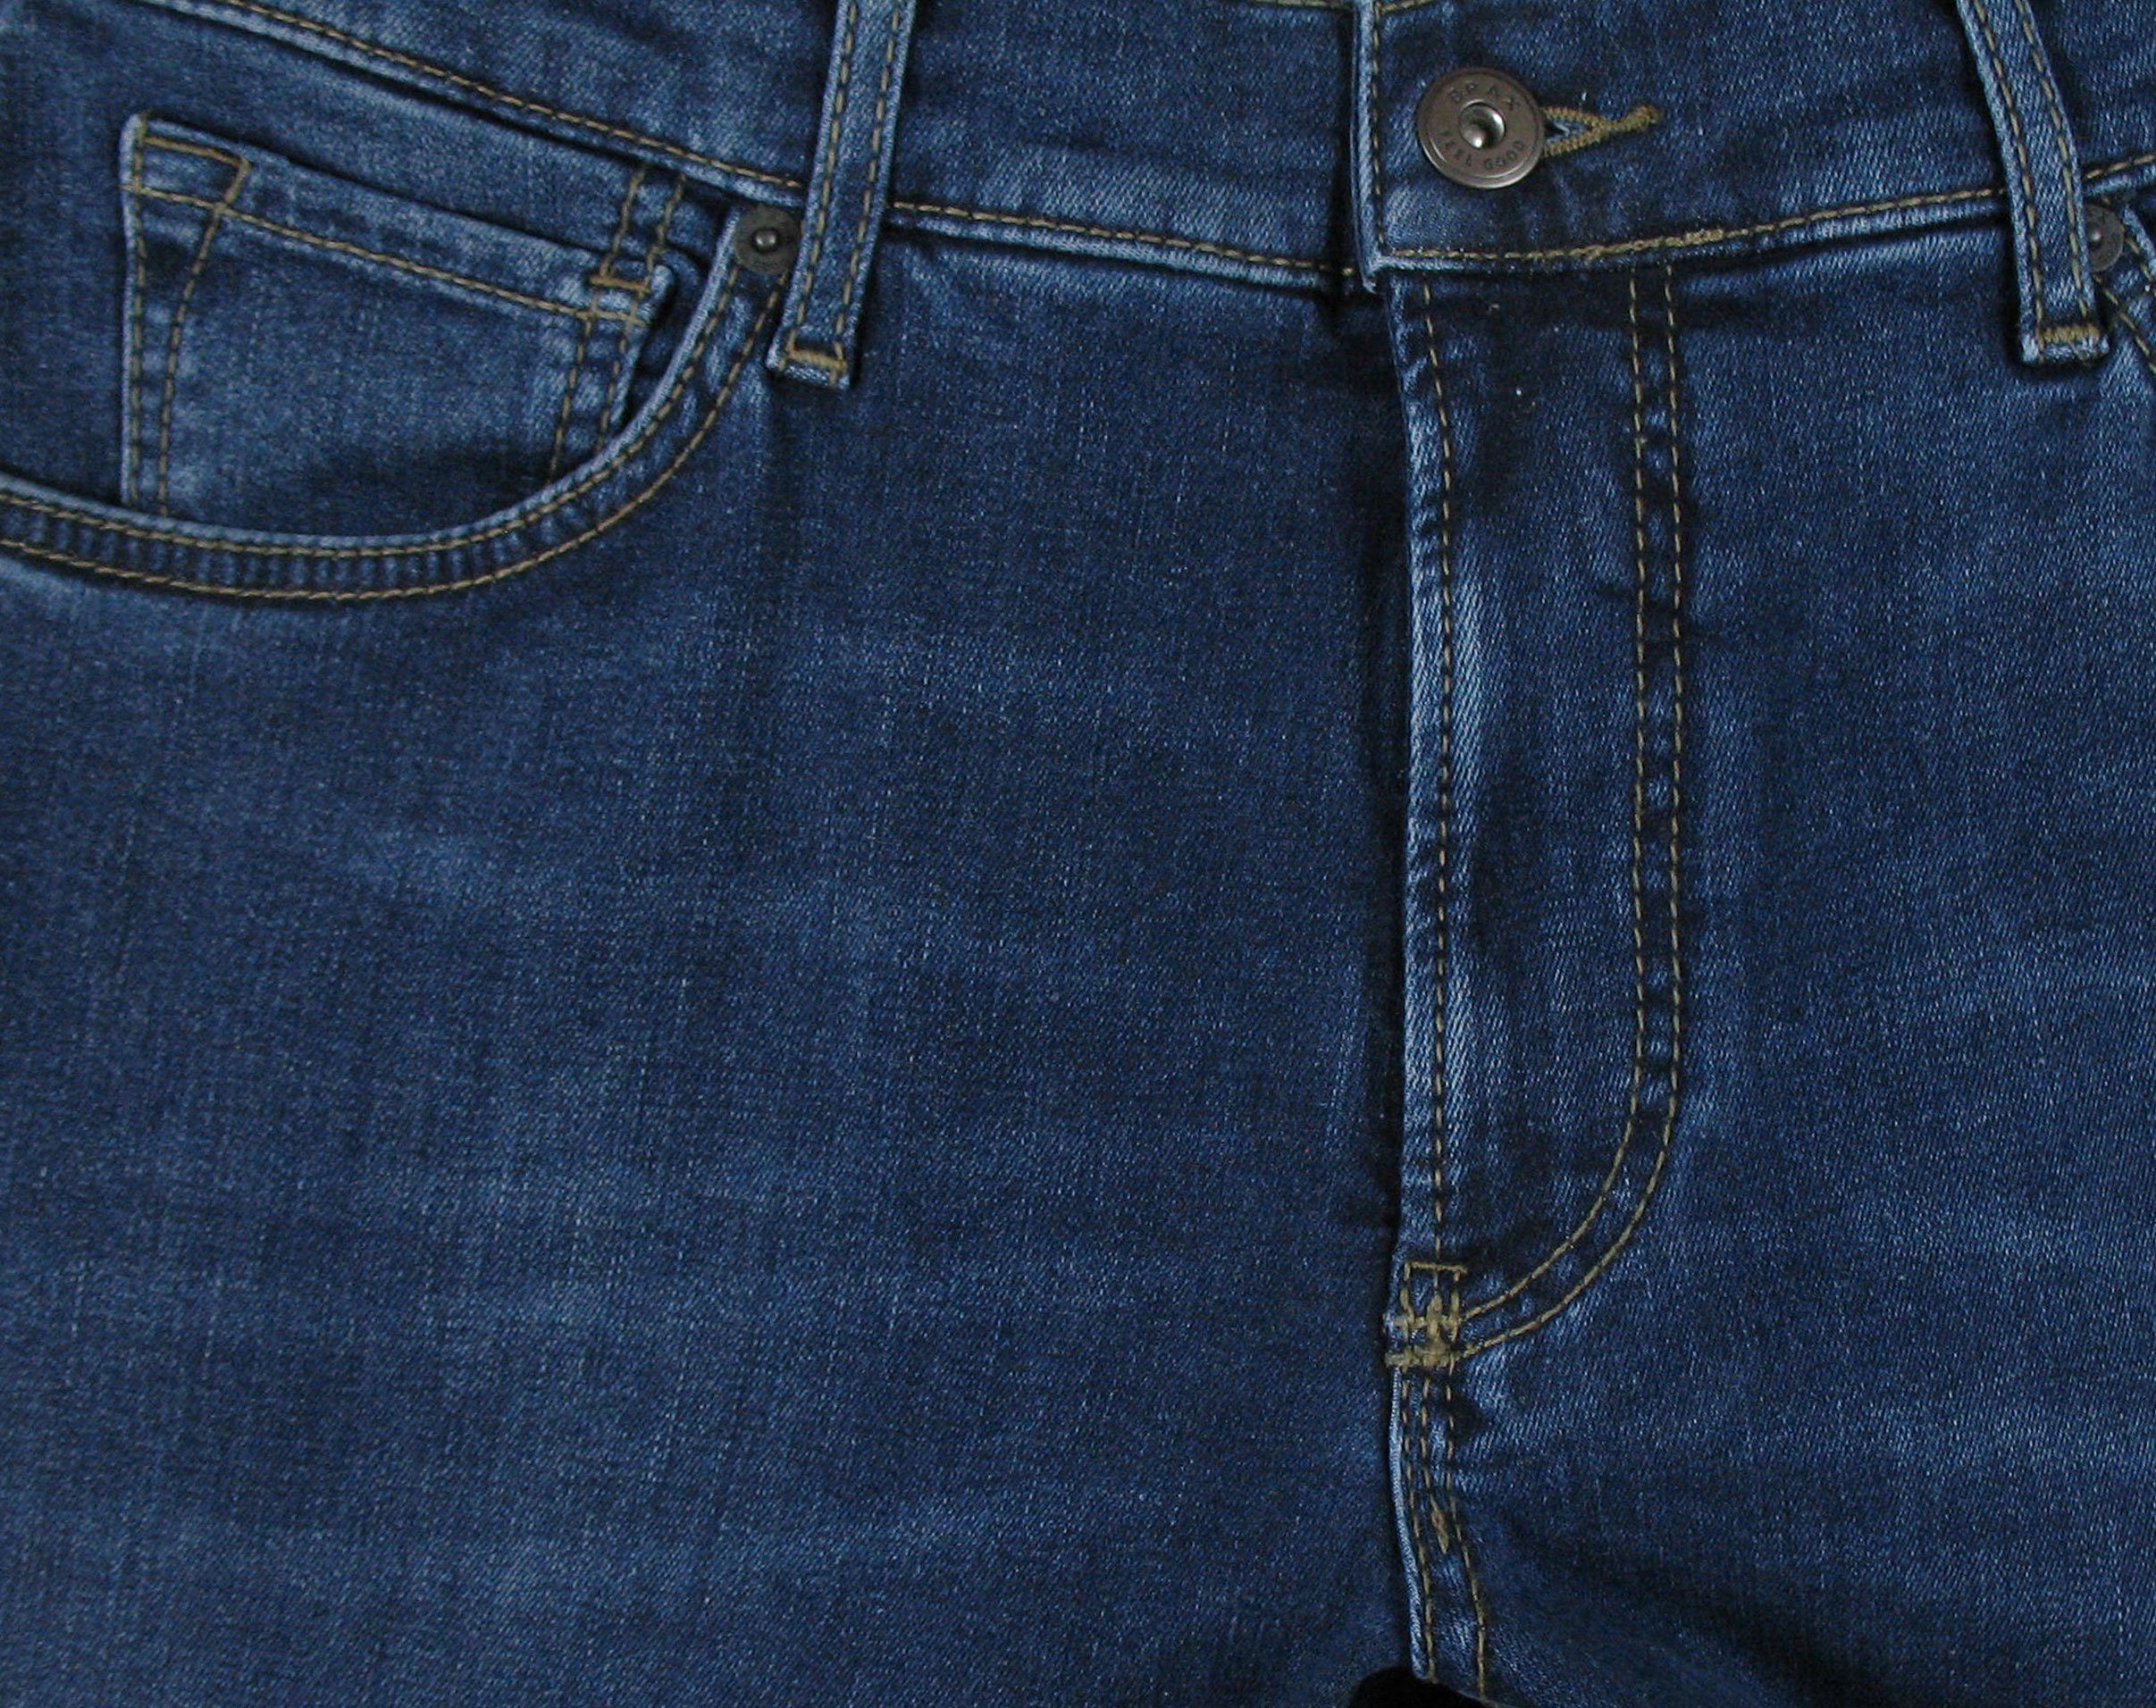 5-Pocket-Jeans Gallery Brax Flex Blue Denim Used Ocean Chuck